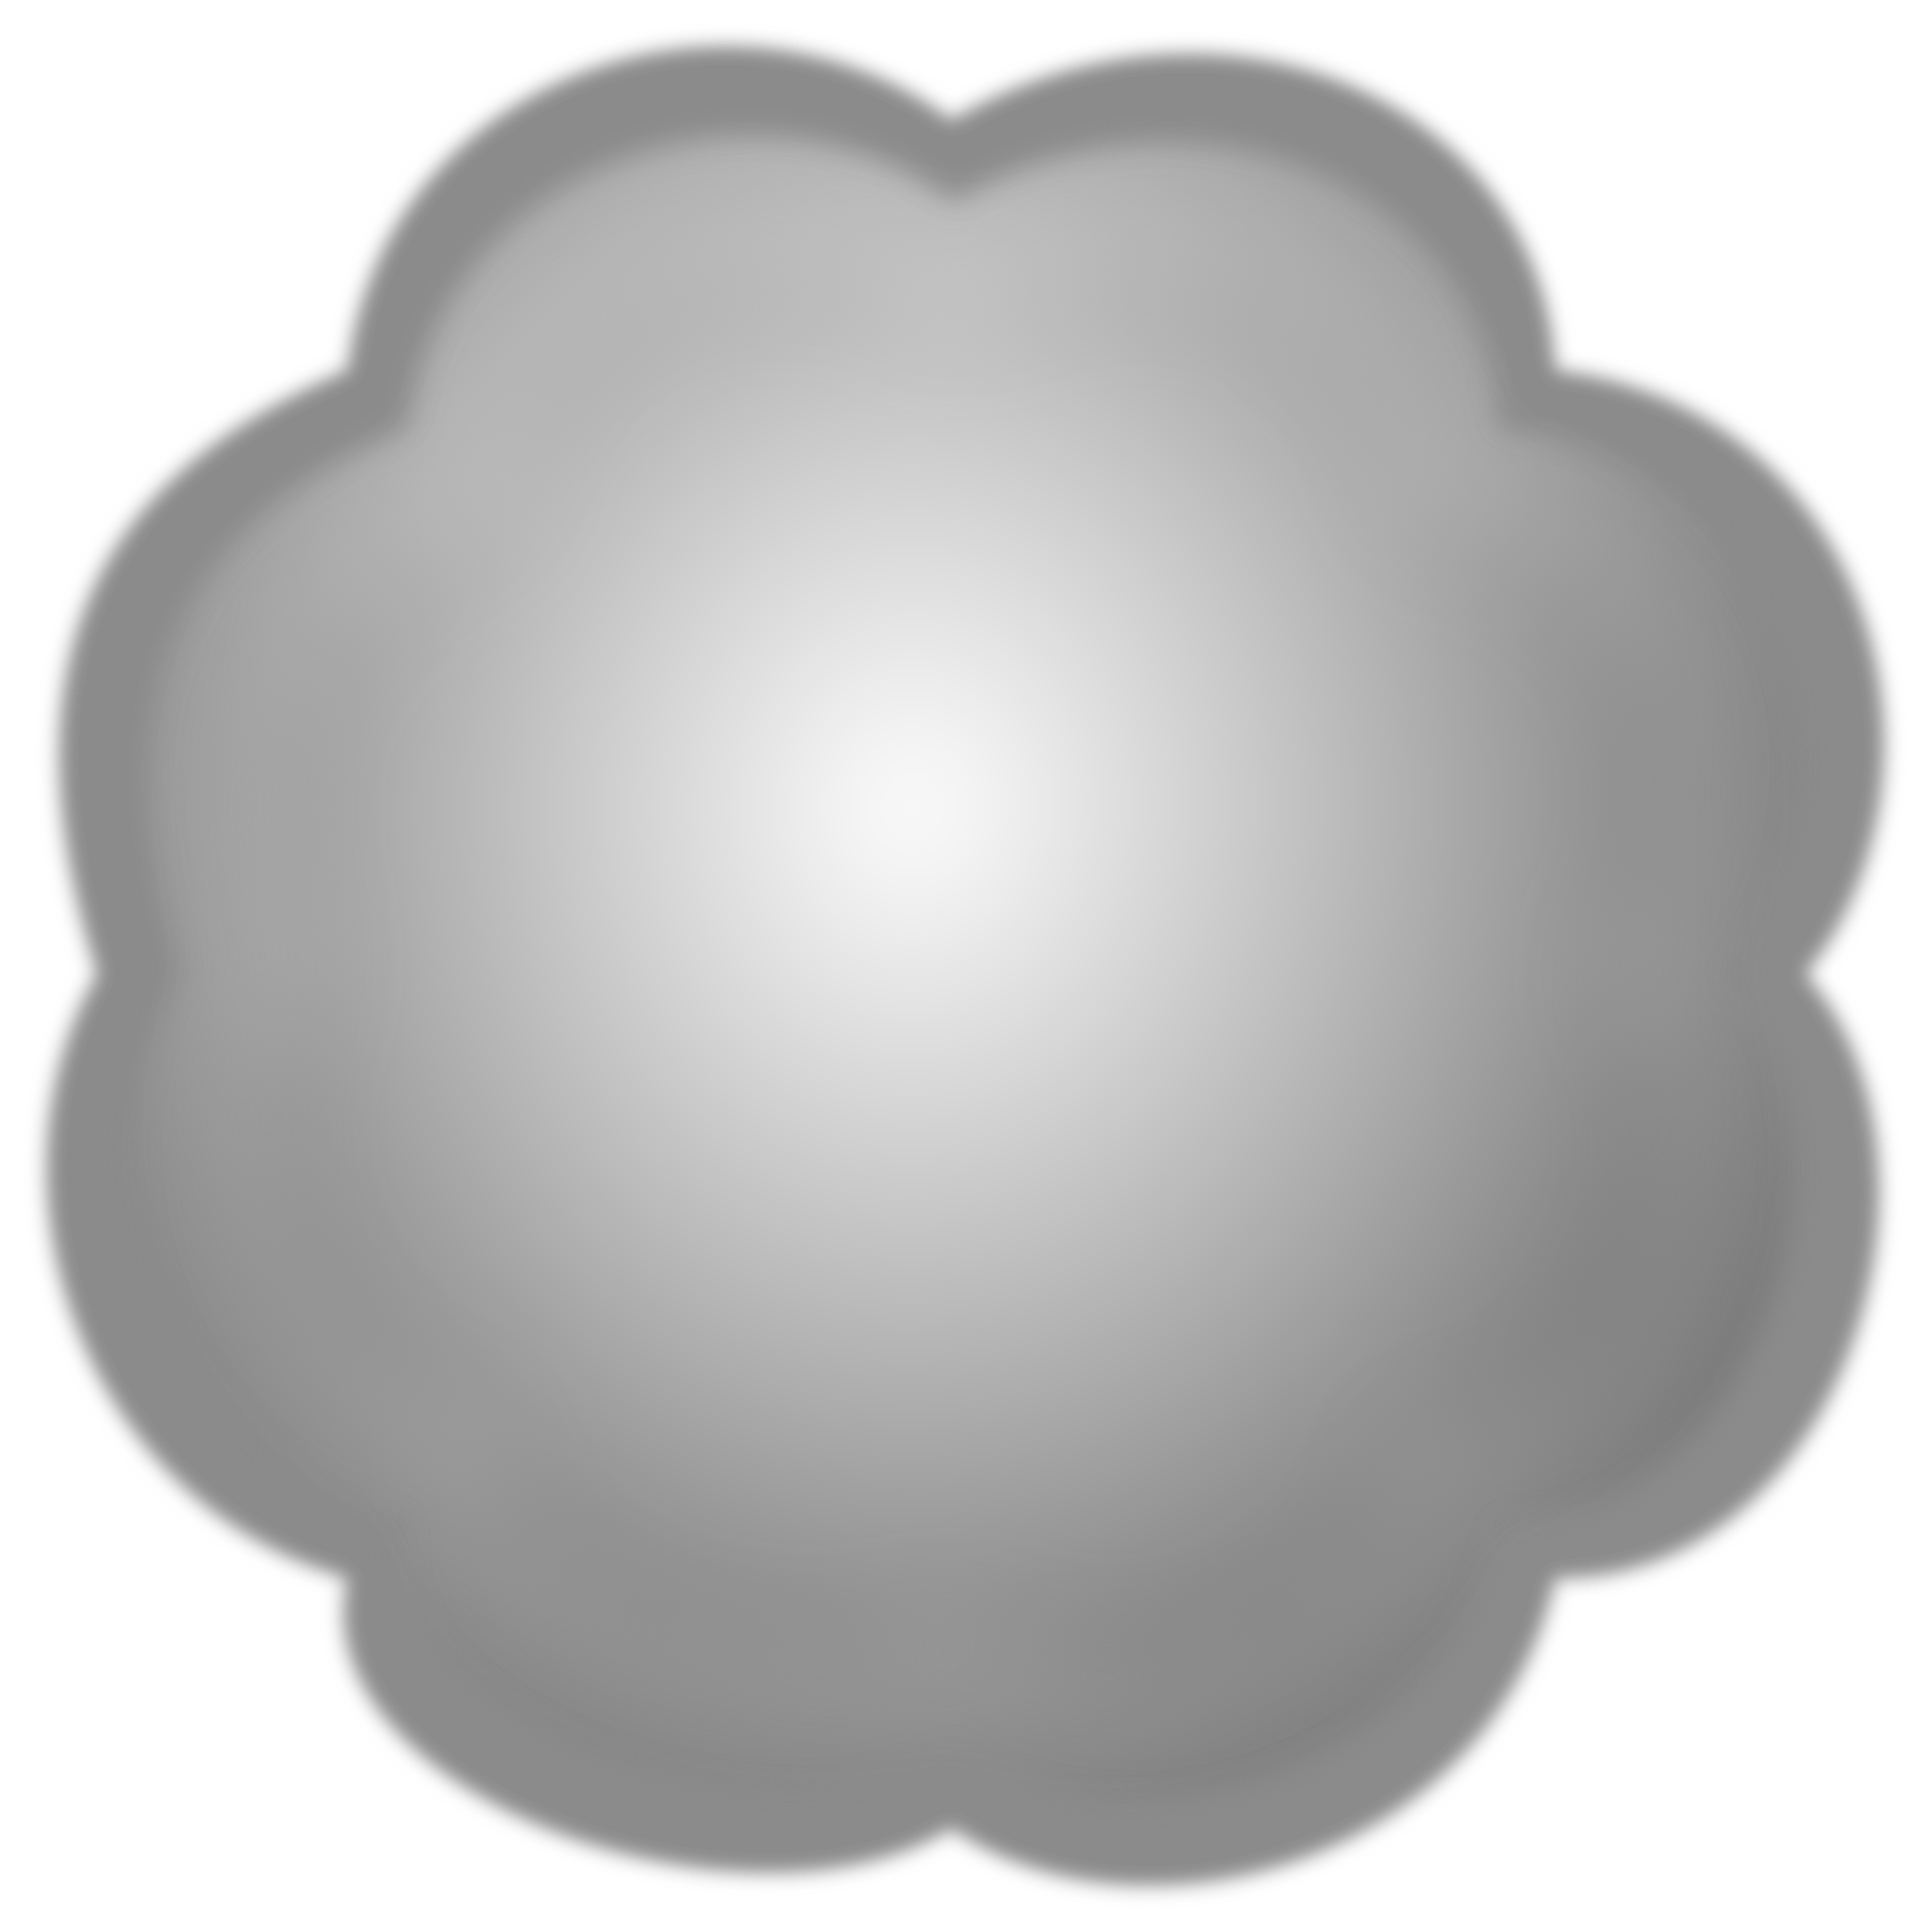 Circle Smoke Cloud PNG HD Quality